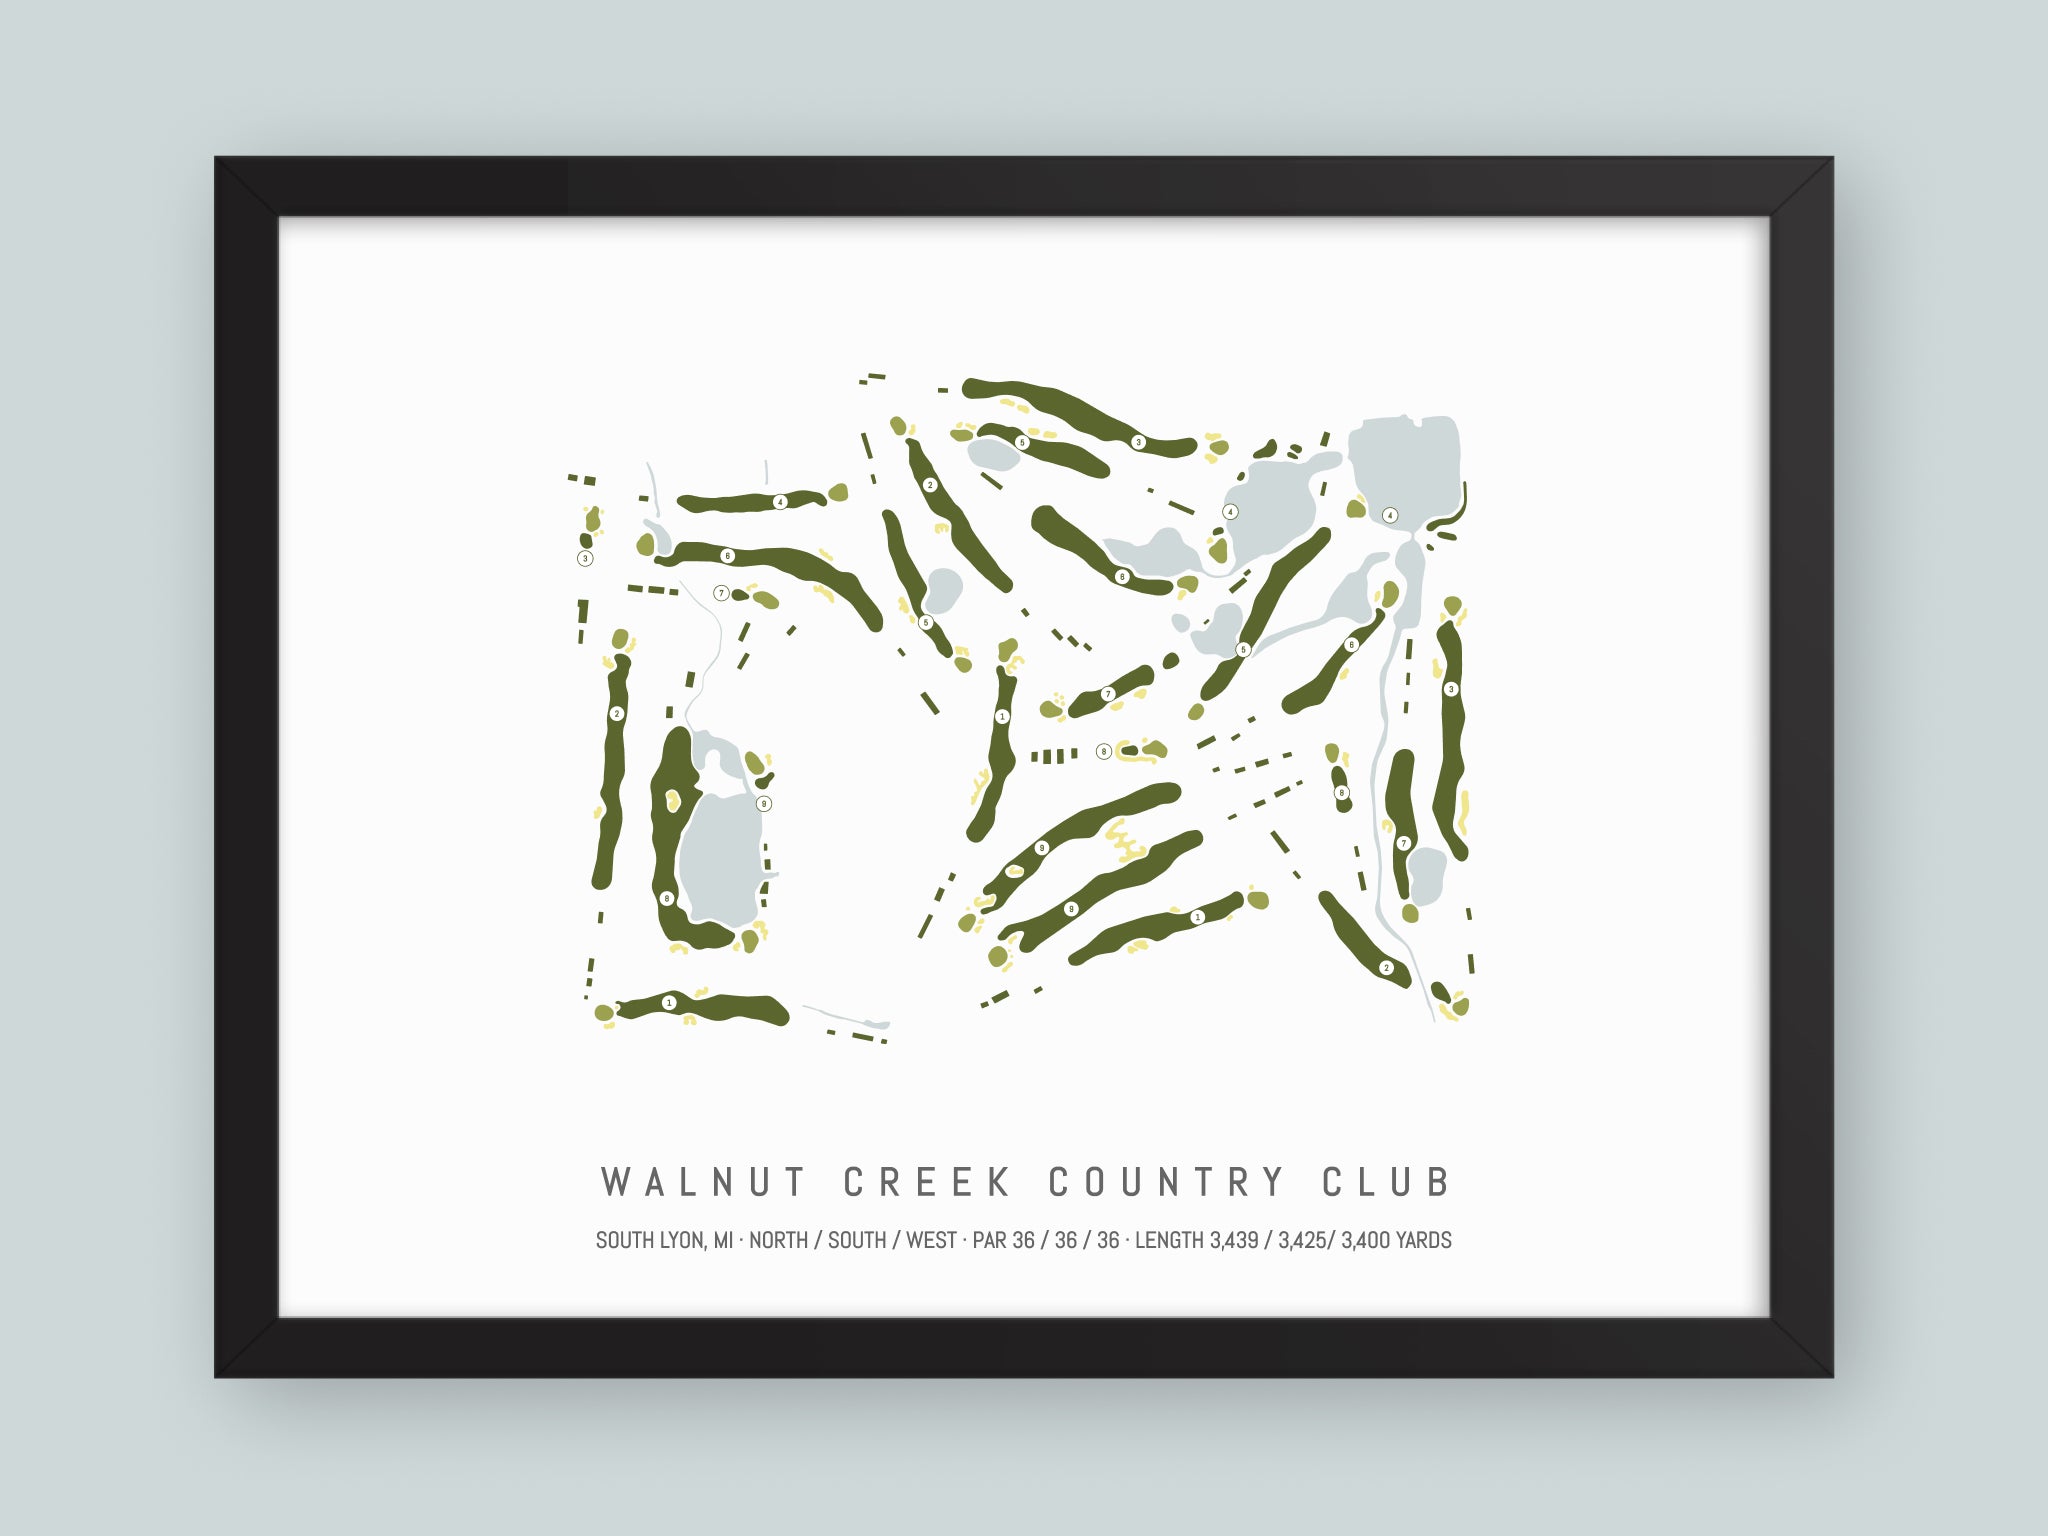 Walnut-Creek-Country-Club-MI--Black-Frame-24x18-With-Hole-Numbers